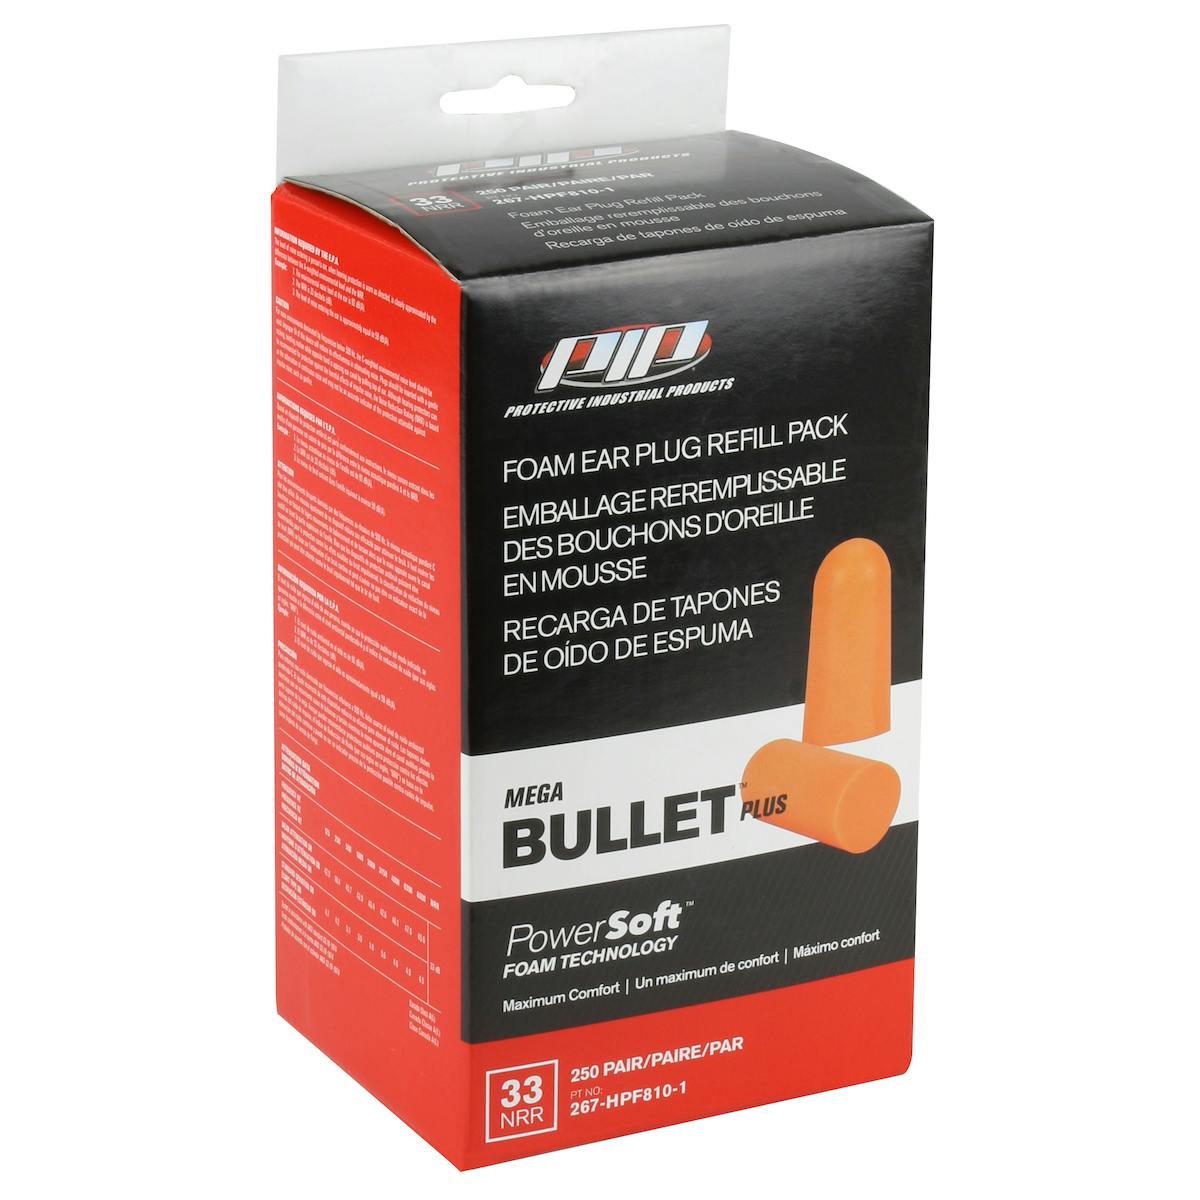 Disposable Soft Polyurethane Foam Ear Plugs - Dispenser Refill Pack, Orange (267-HPF810-1) - OS_0